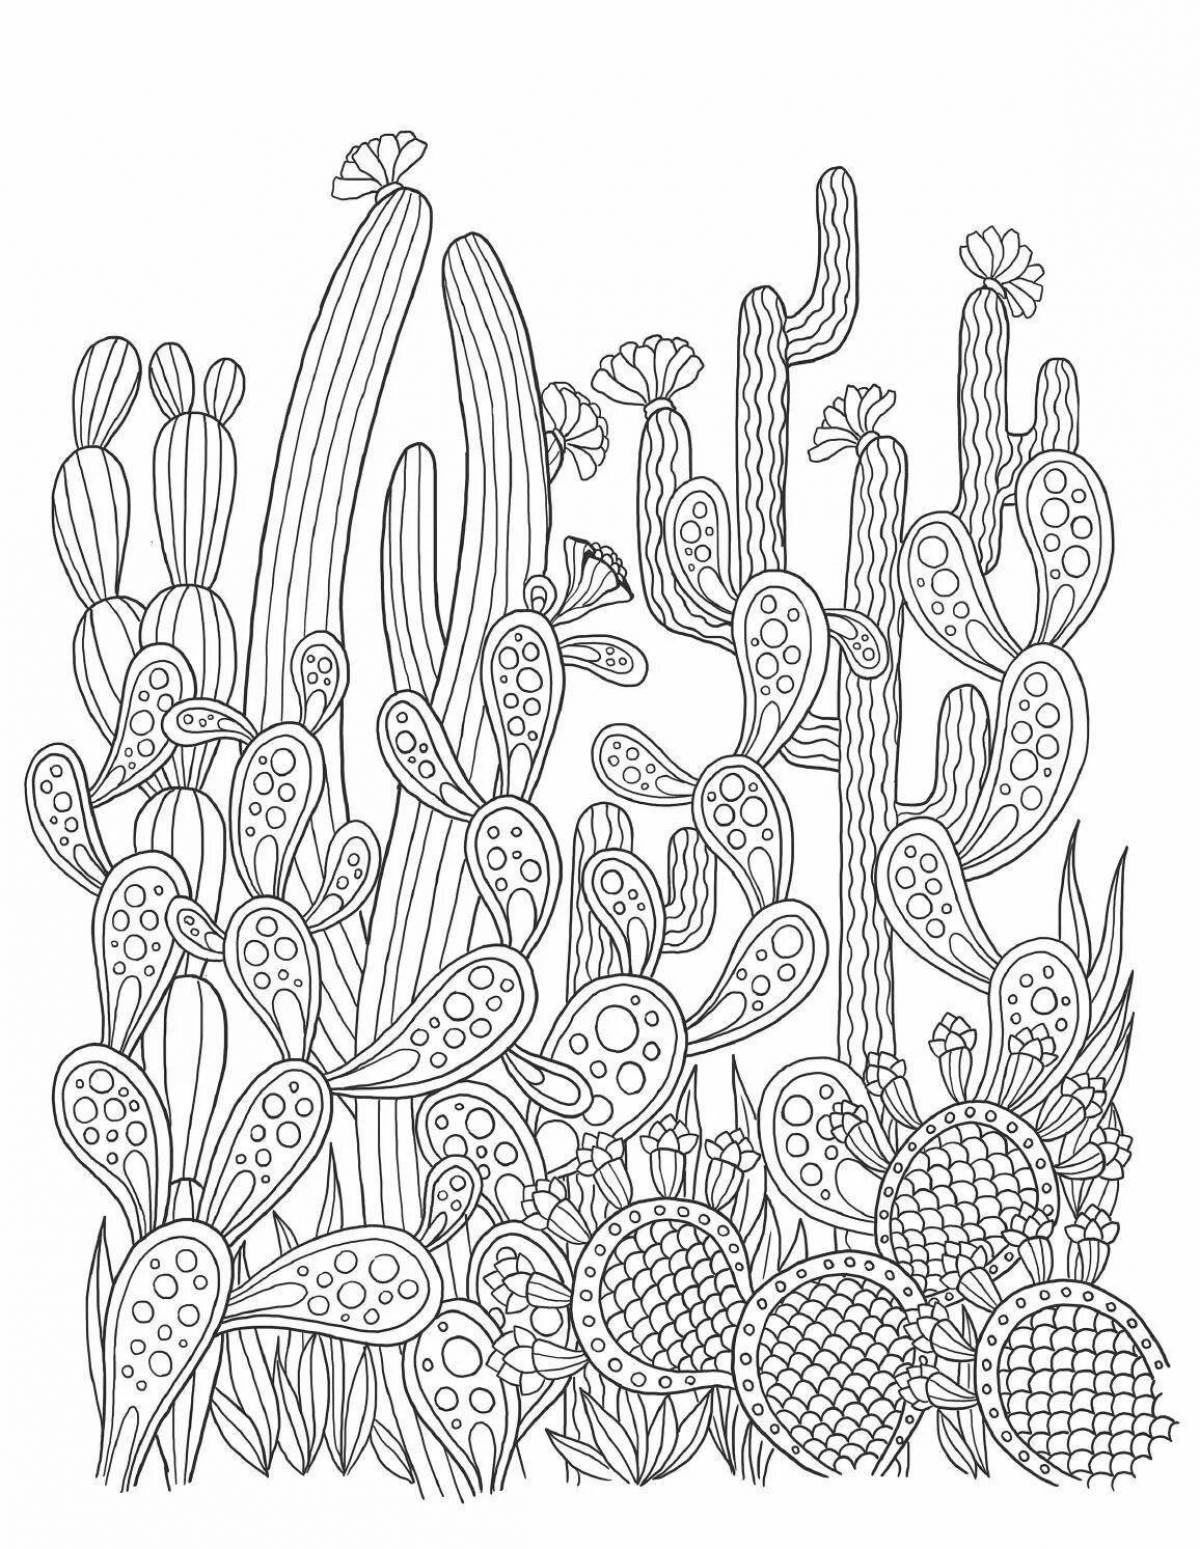 Coloring big cactus